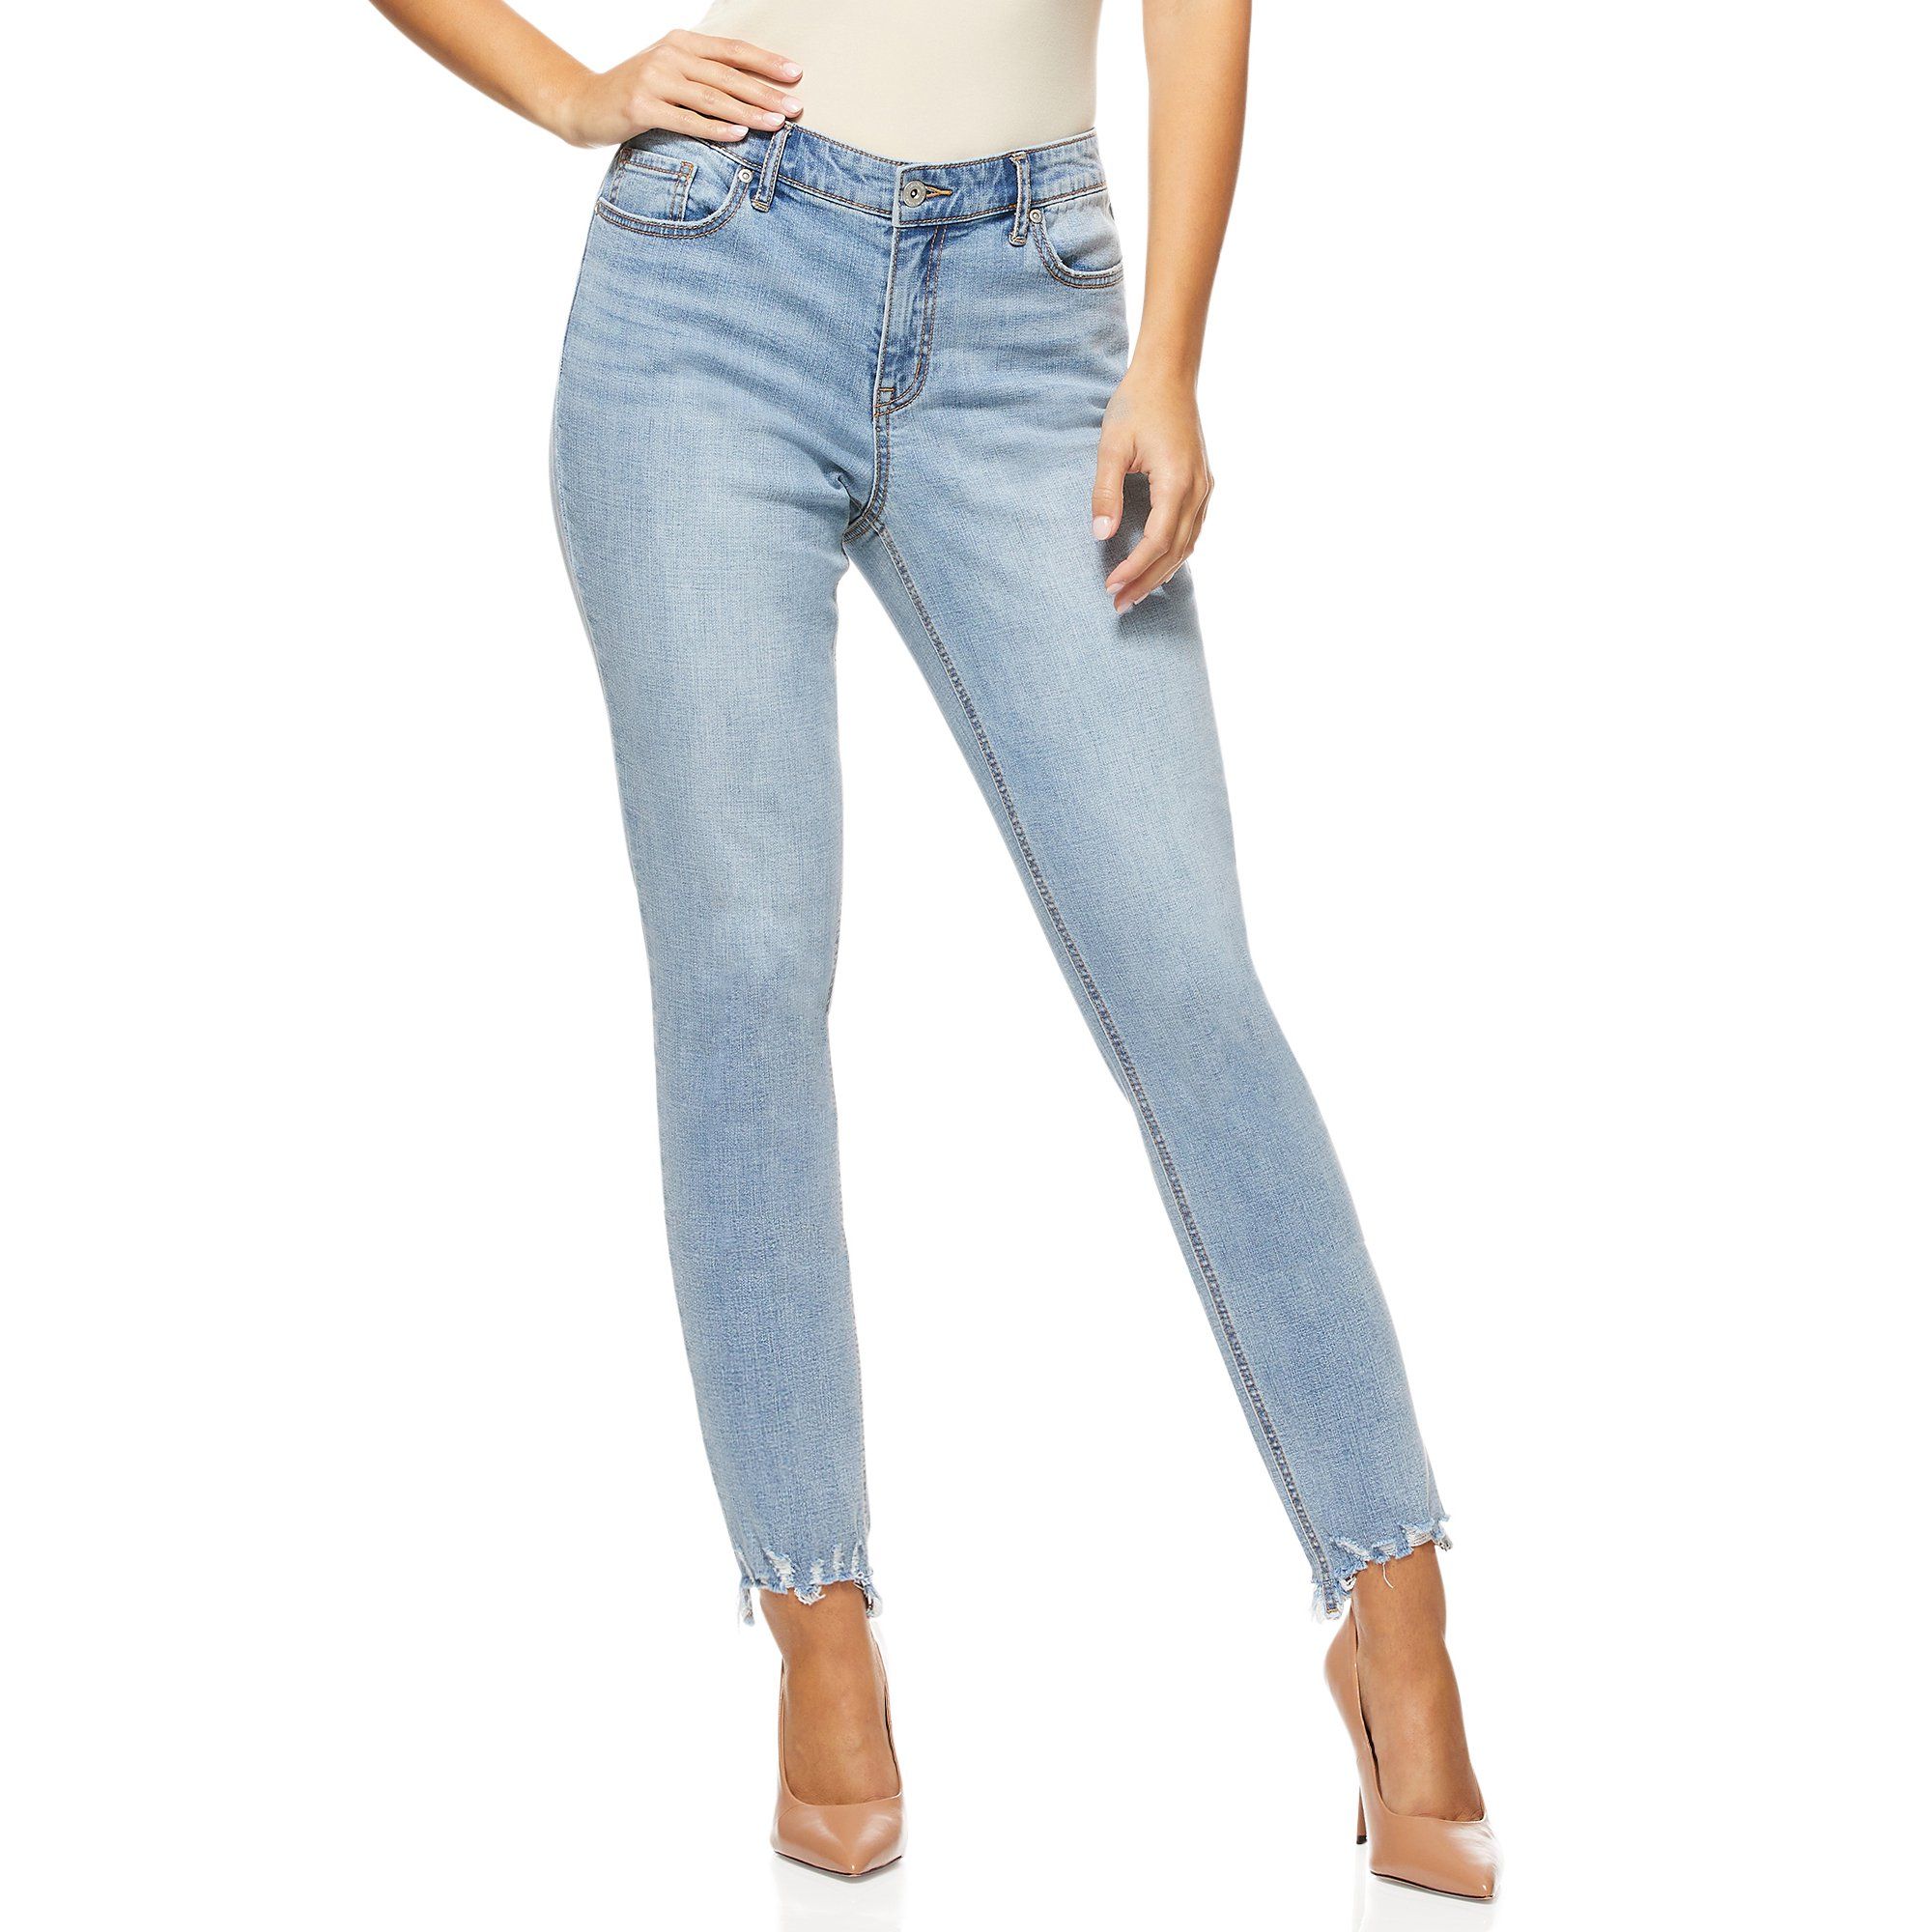 Sofia Jeans by Sofia Vergara Women’s Bagi Boyfriend Jeans with Sequin Detail | Walmart (US)